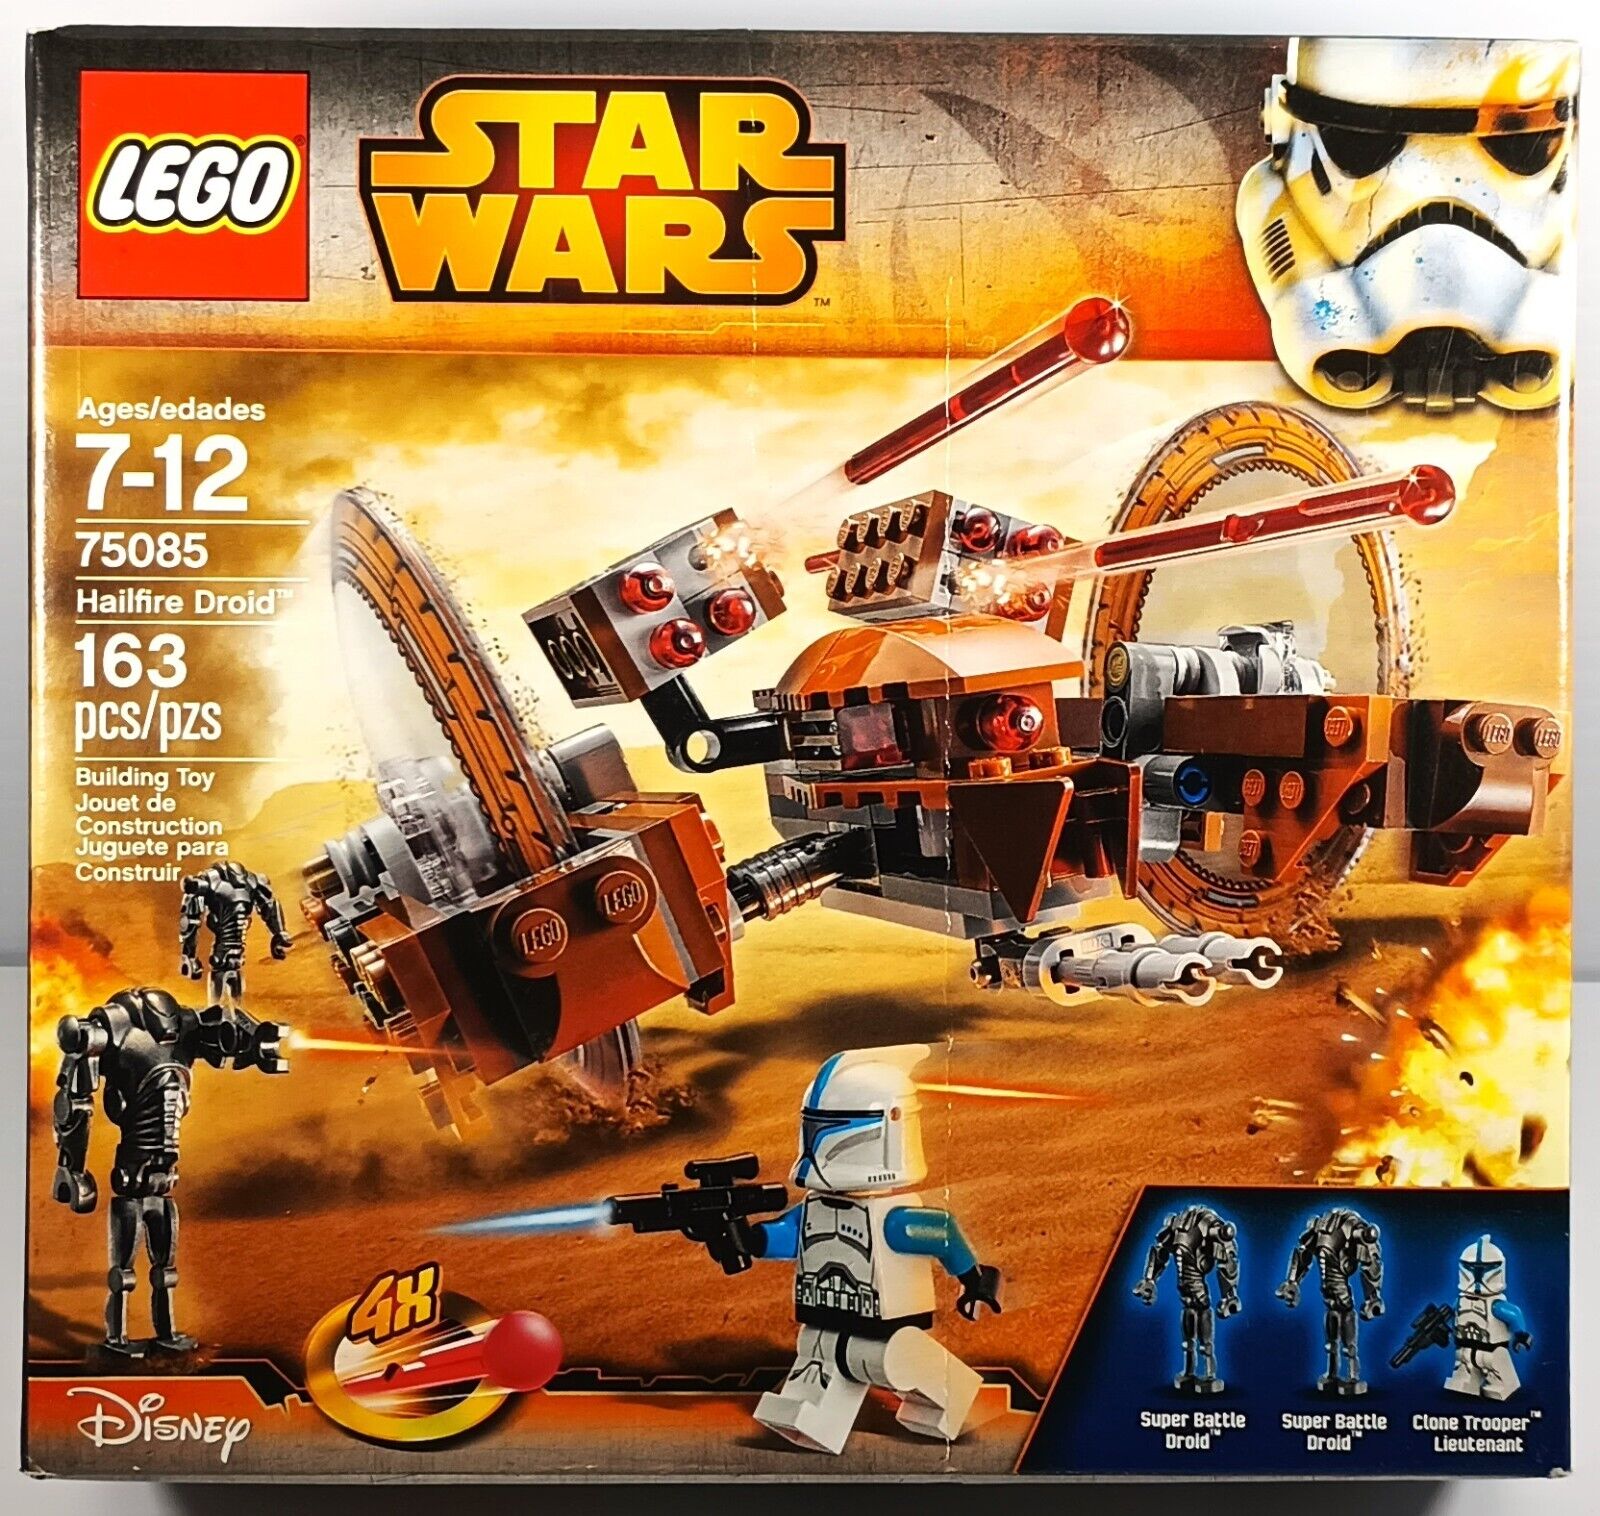 LEGO 75085 Star Wars HAILFIRE DROID, New, See Pics/Description!